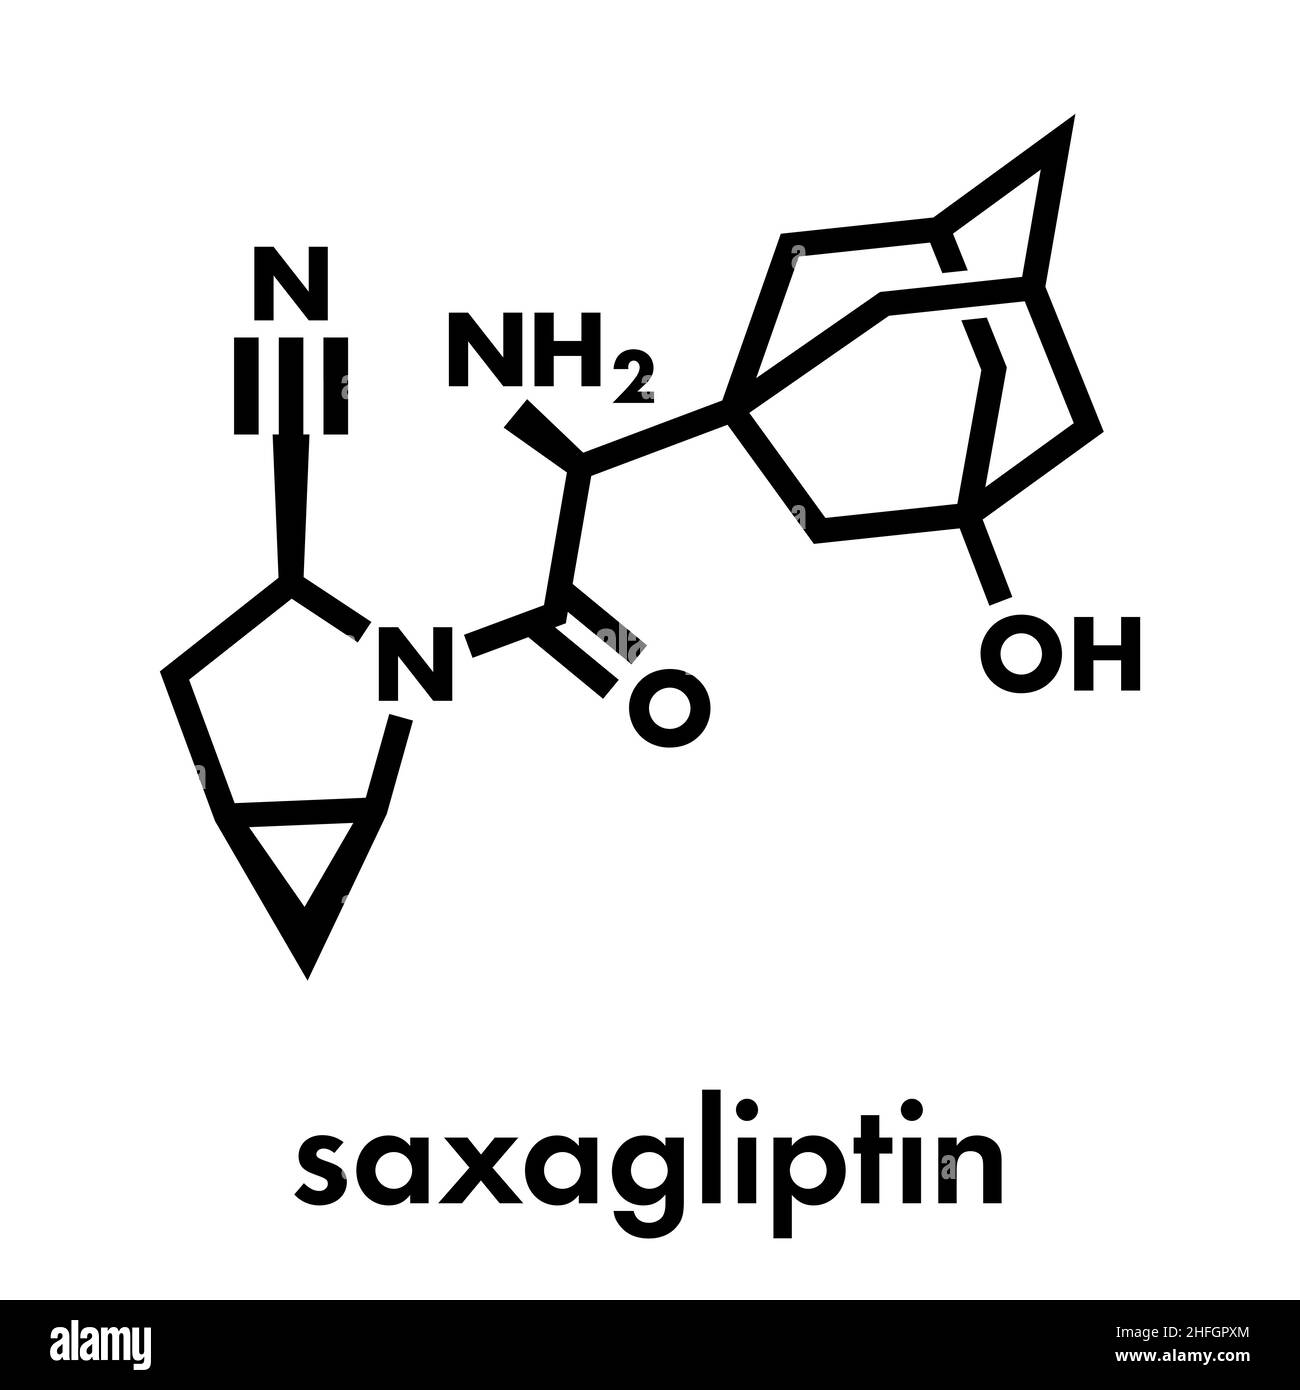 Saxagliptin diabetes drug molecule. Inhibitor of dipeptidyl peptidase-4 (DPP4). Skeletal formula. Stock Vector